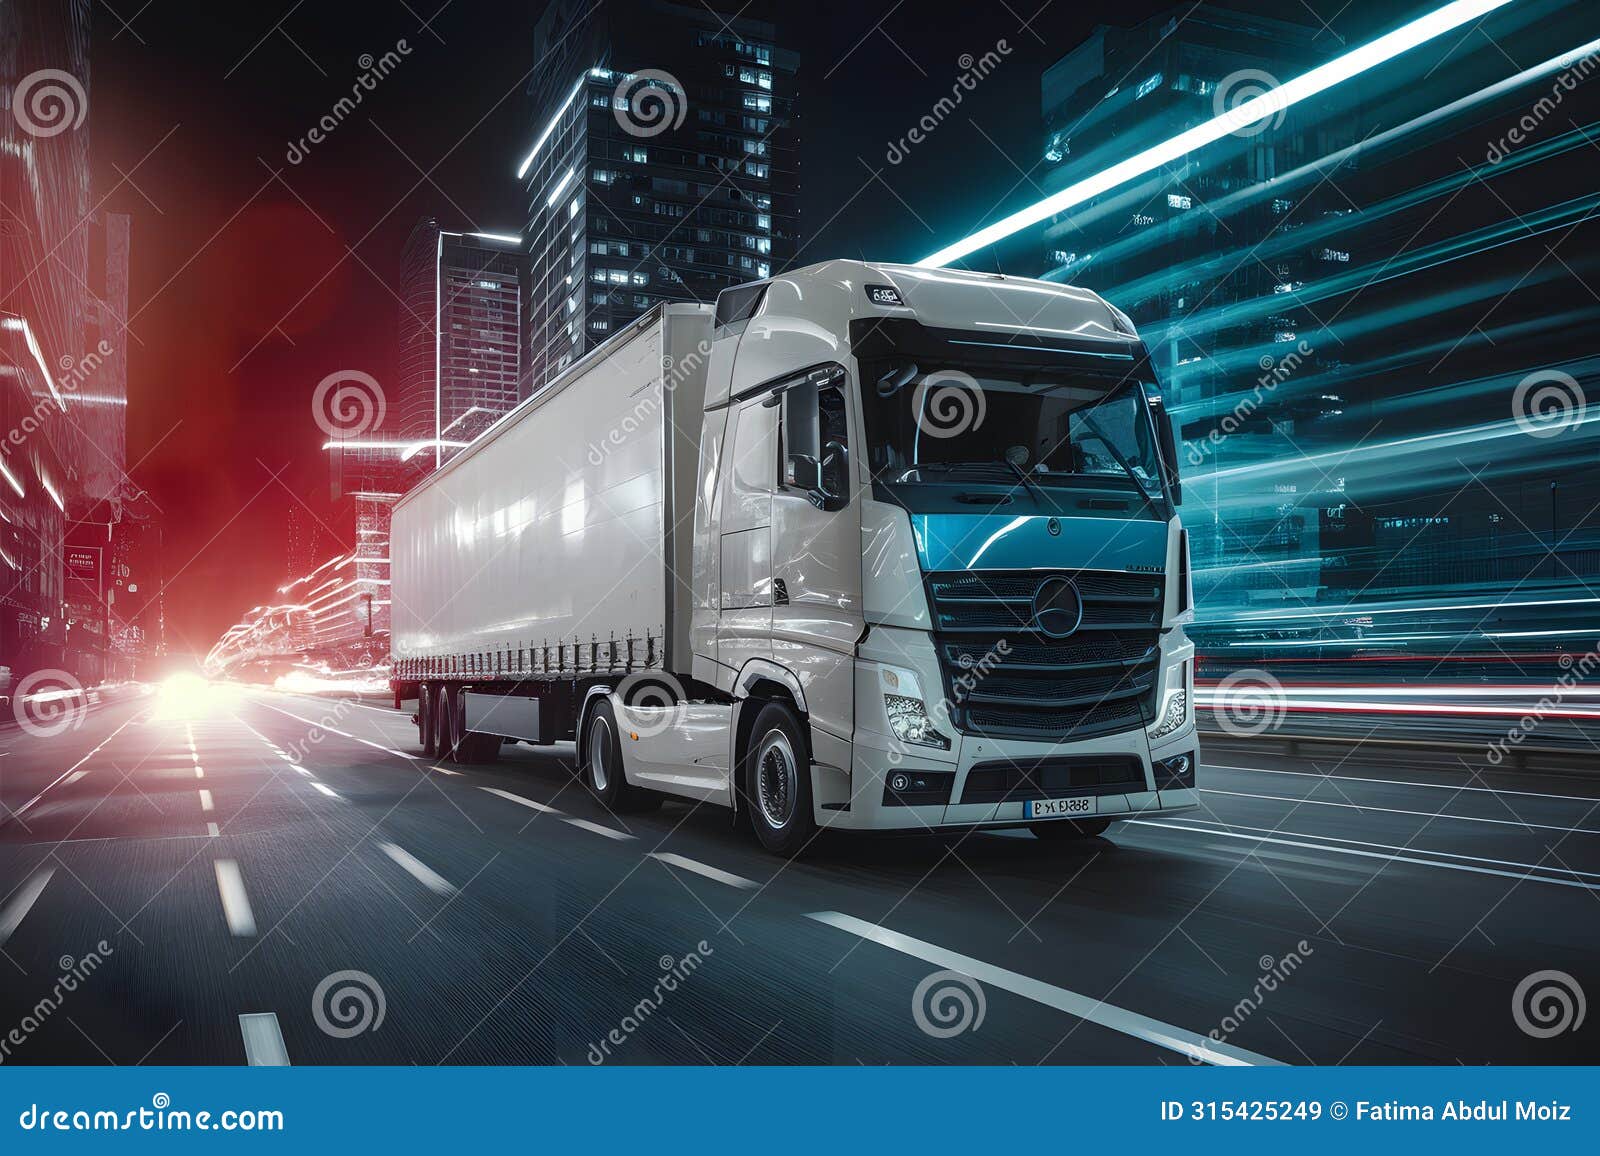 white truck speeds through modern city with light effects